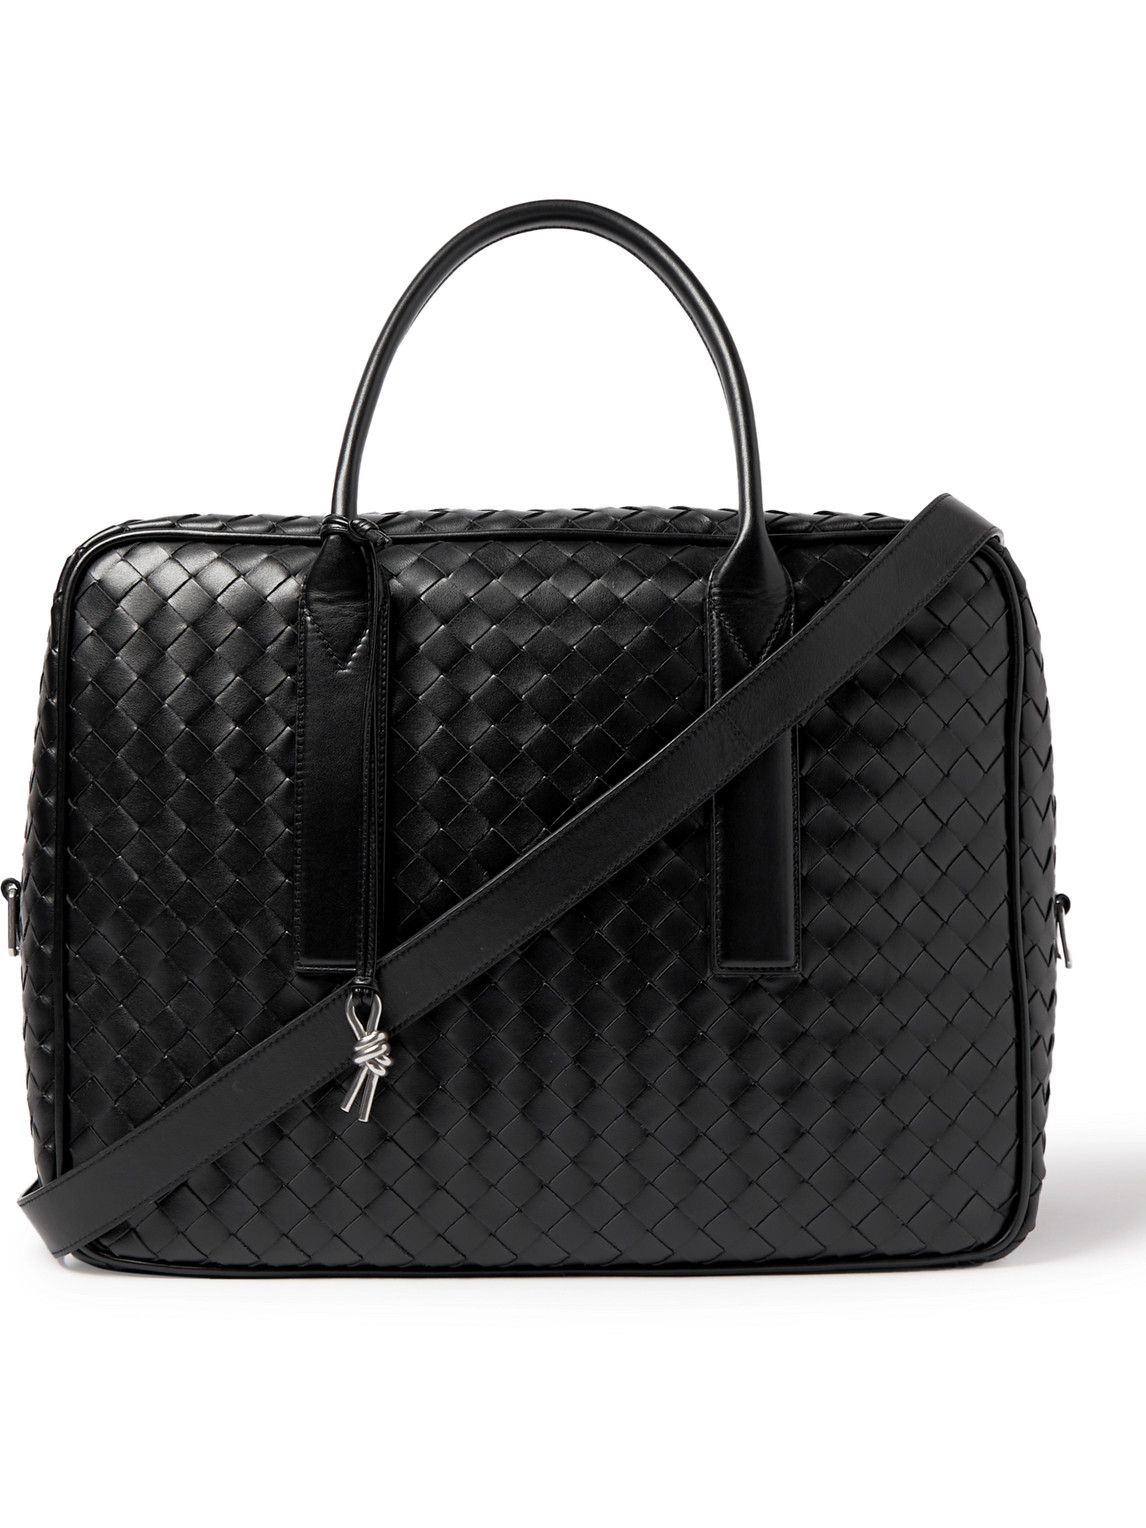 Bottega Veneta Intrecciato Leather Briefcase In Black